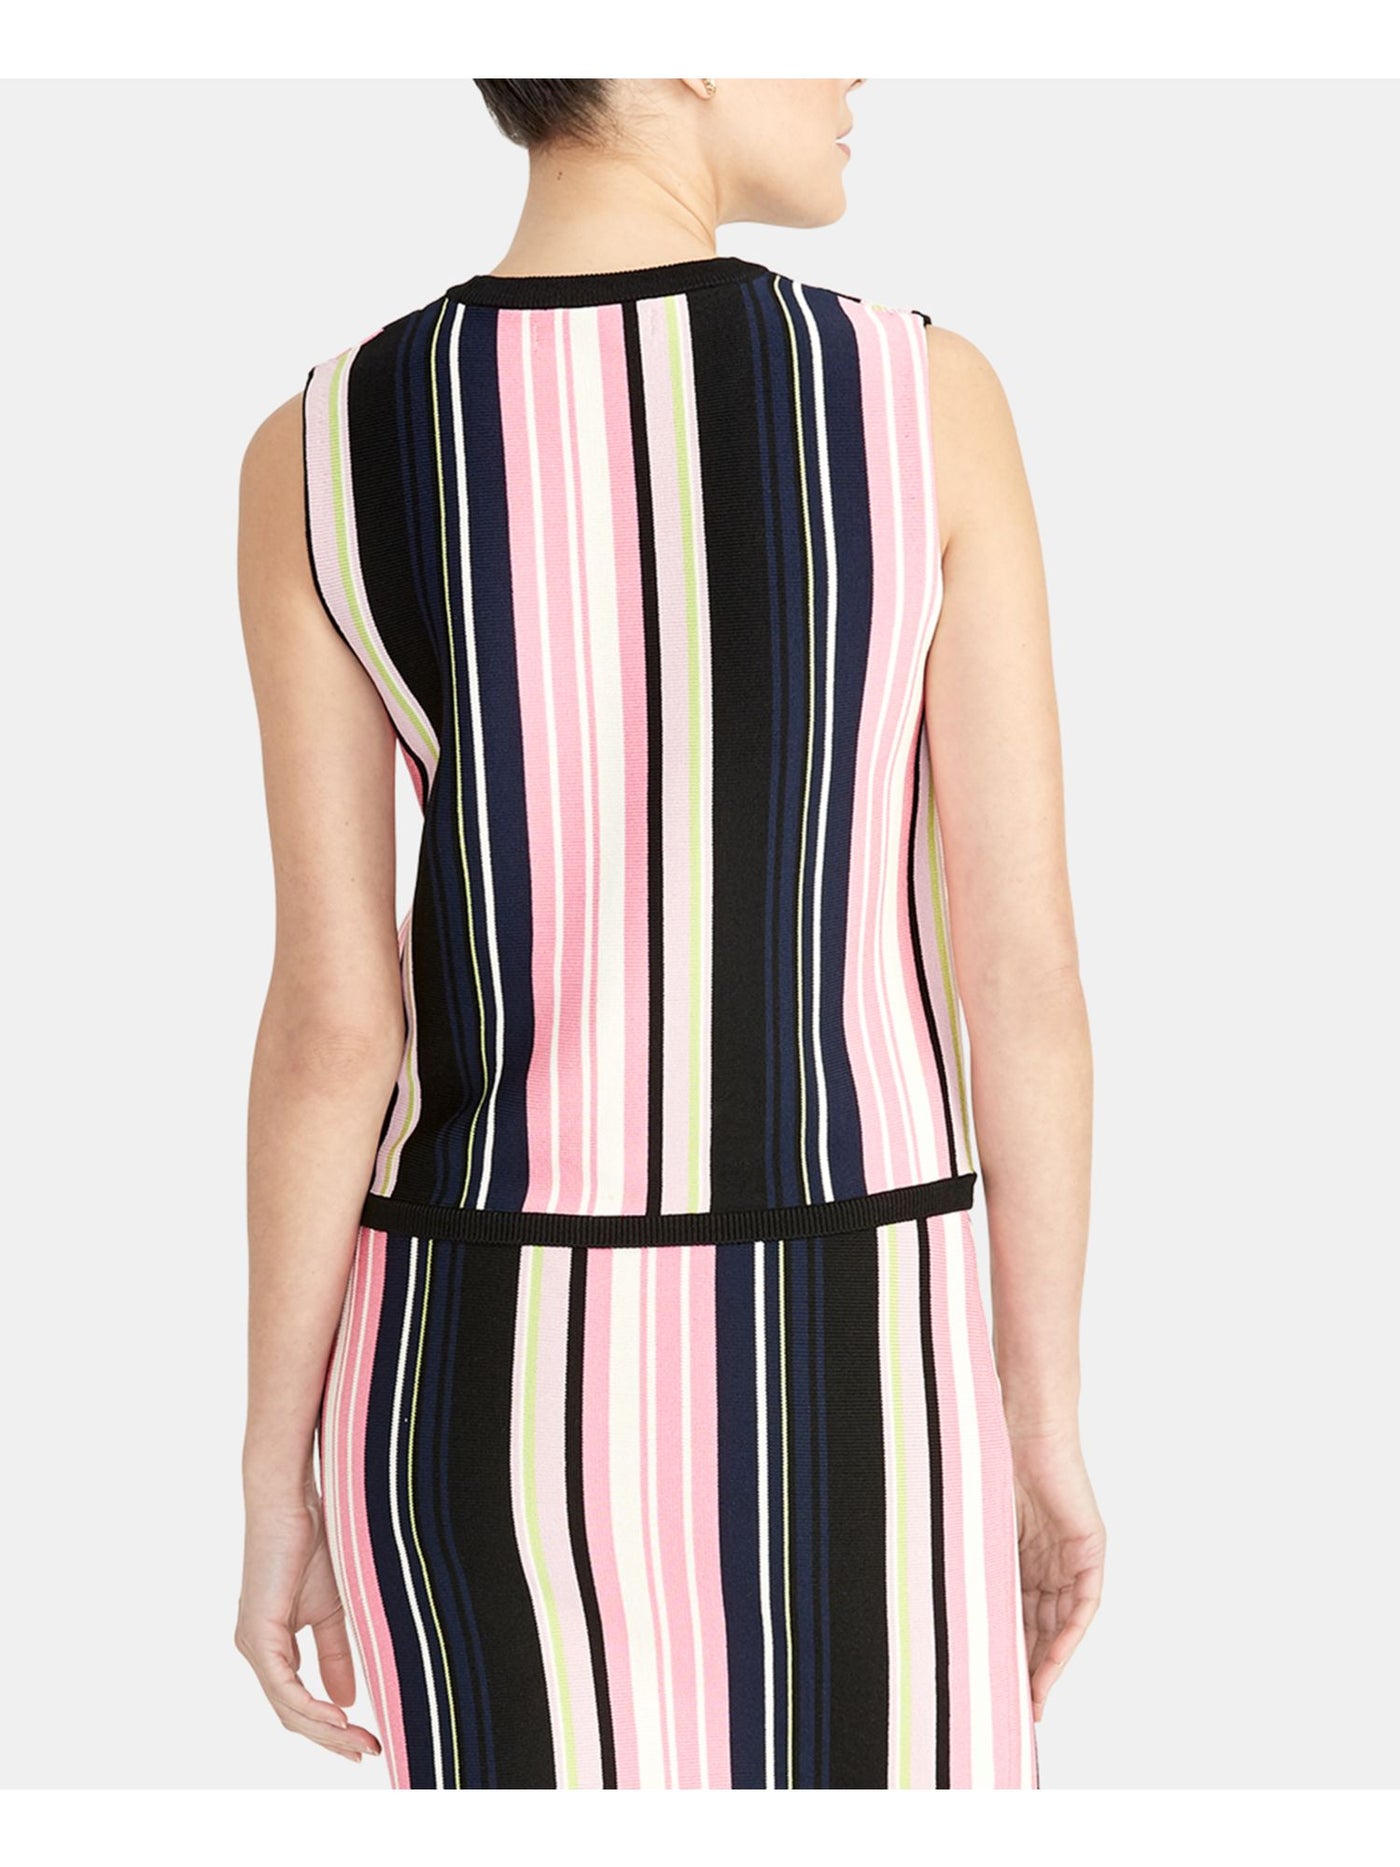 RACHEL ROY Womens Pink Striped Sleeveless Jewel Neck Tank Top Plus Size: XXL